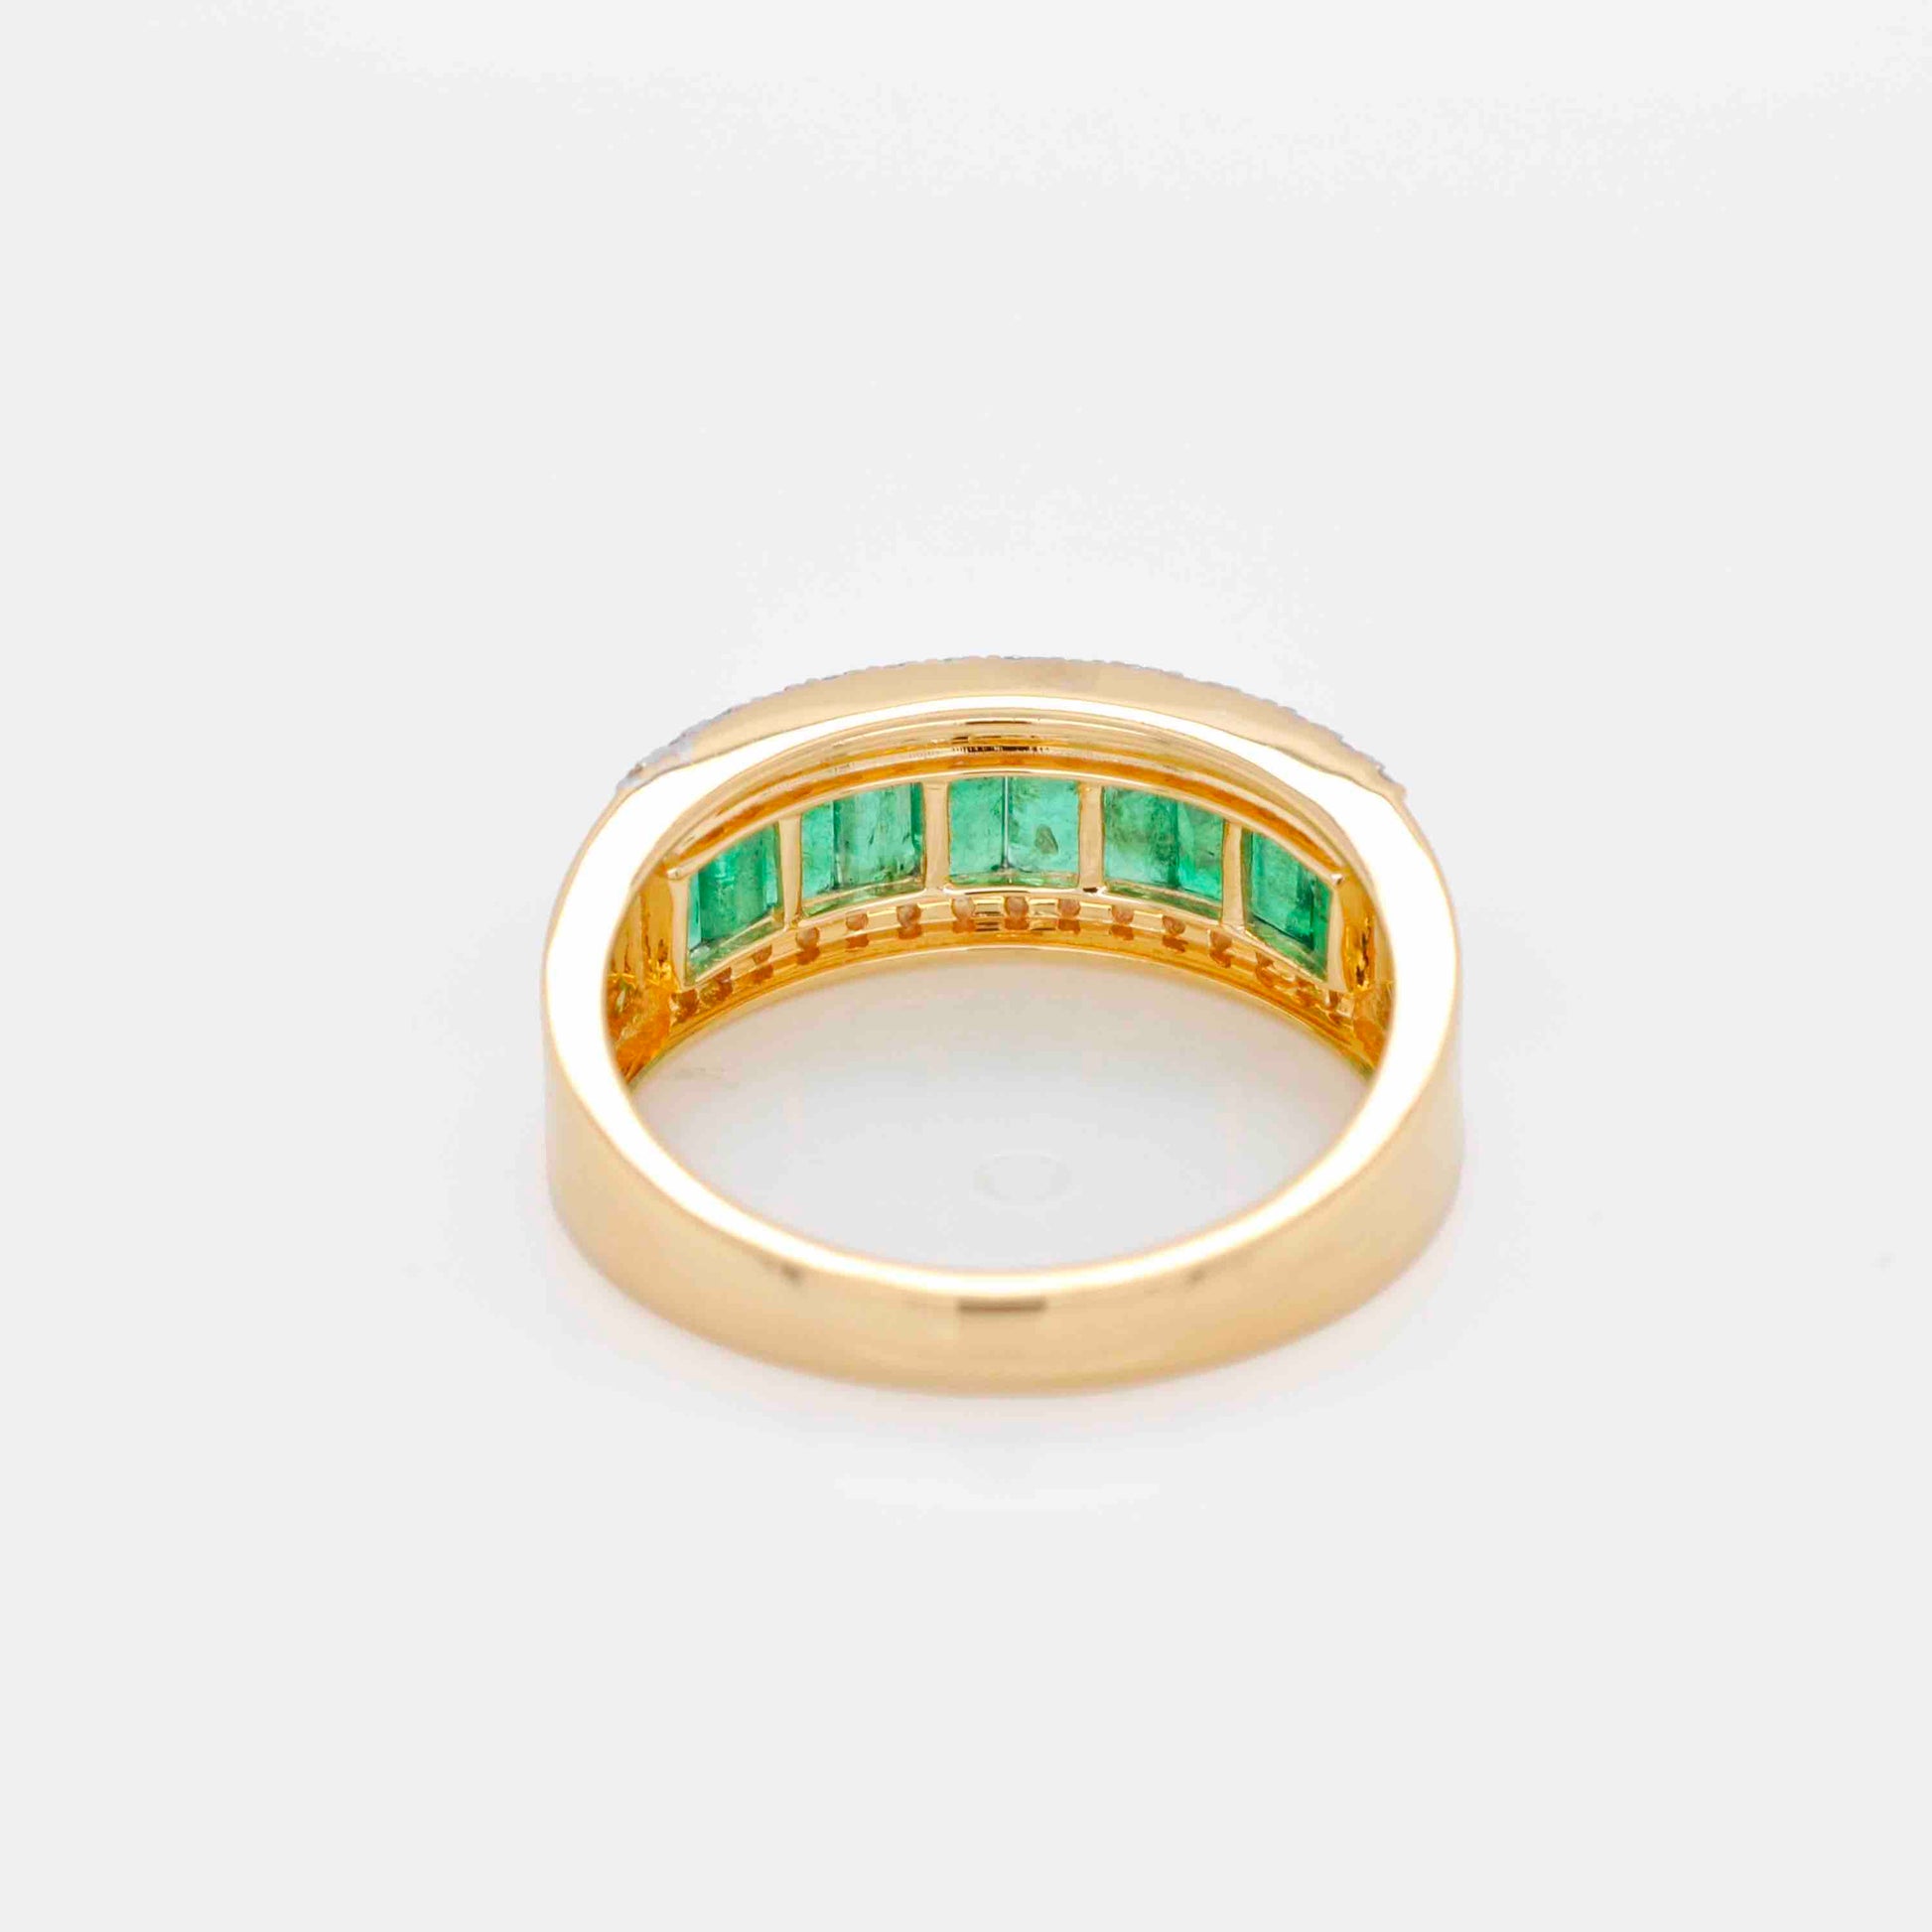 18K Gold Emerald Baguette Diamond Band Ring - Vaibhav Dhadda Jewelry